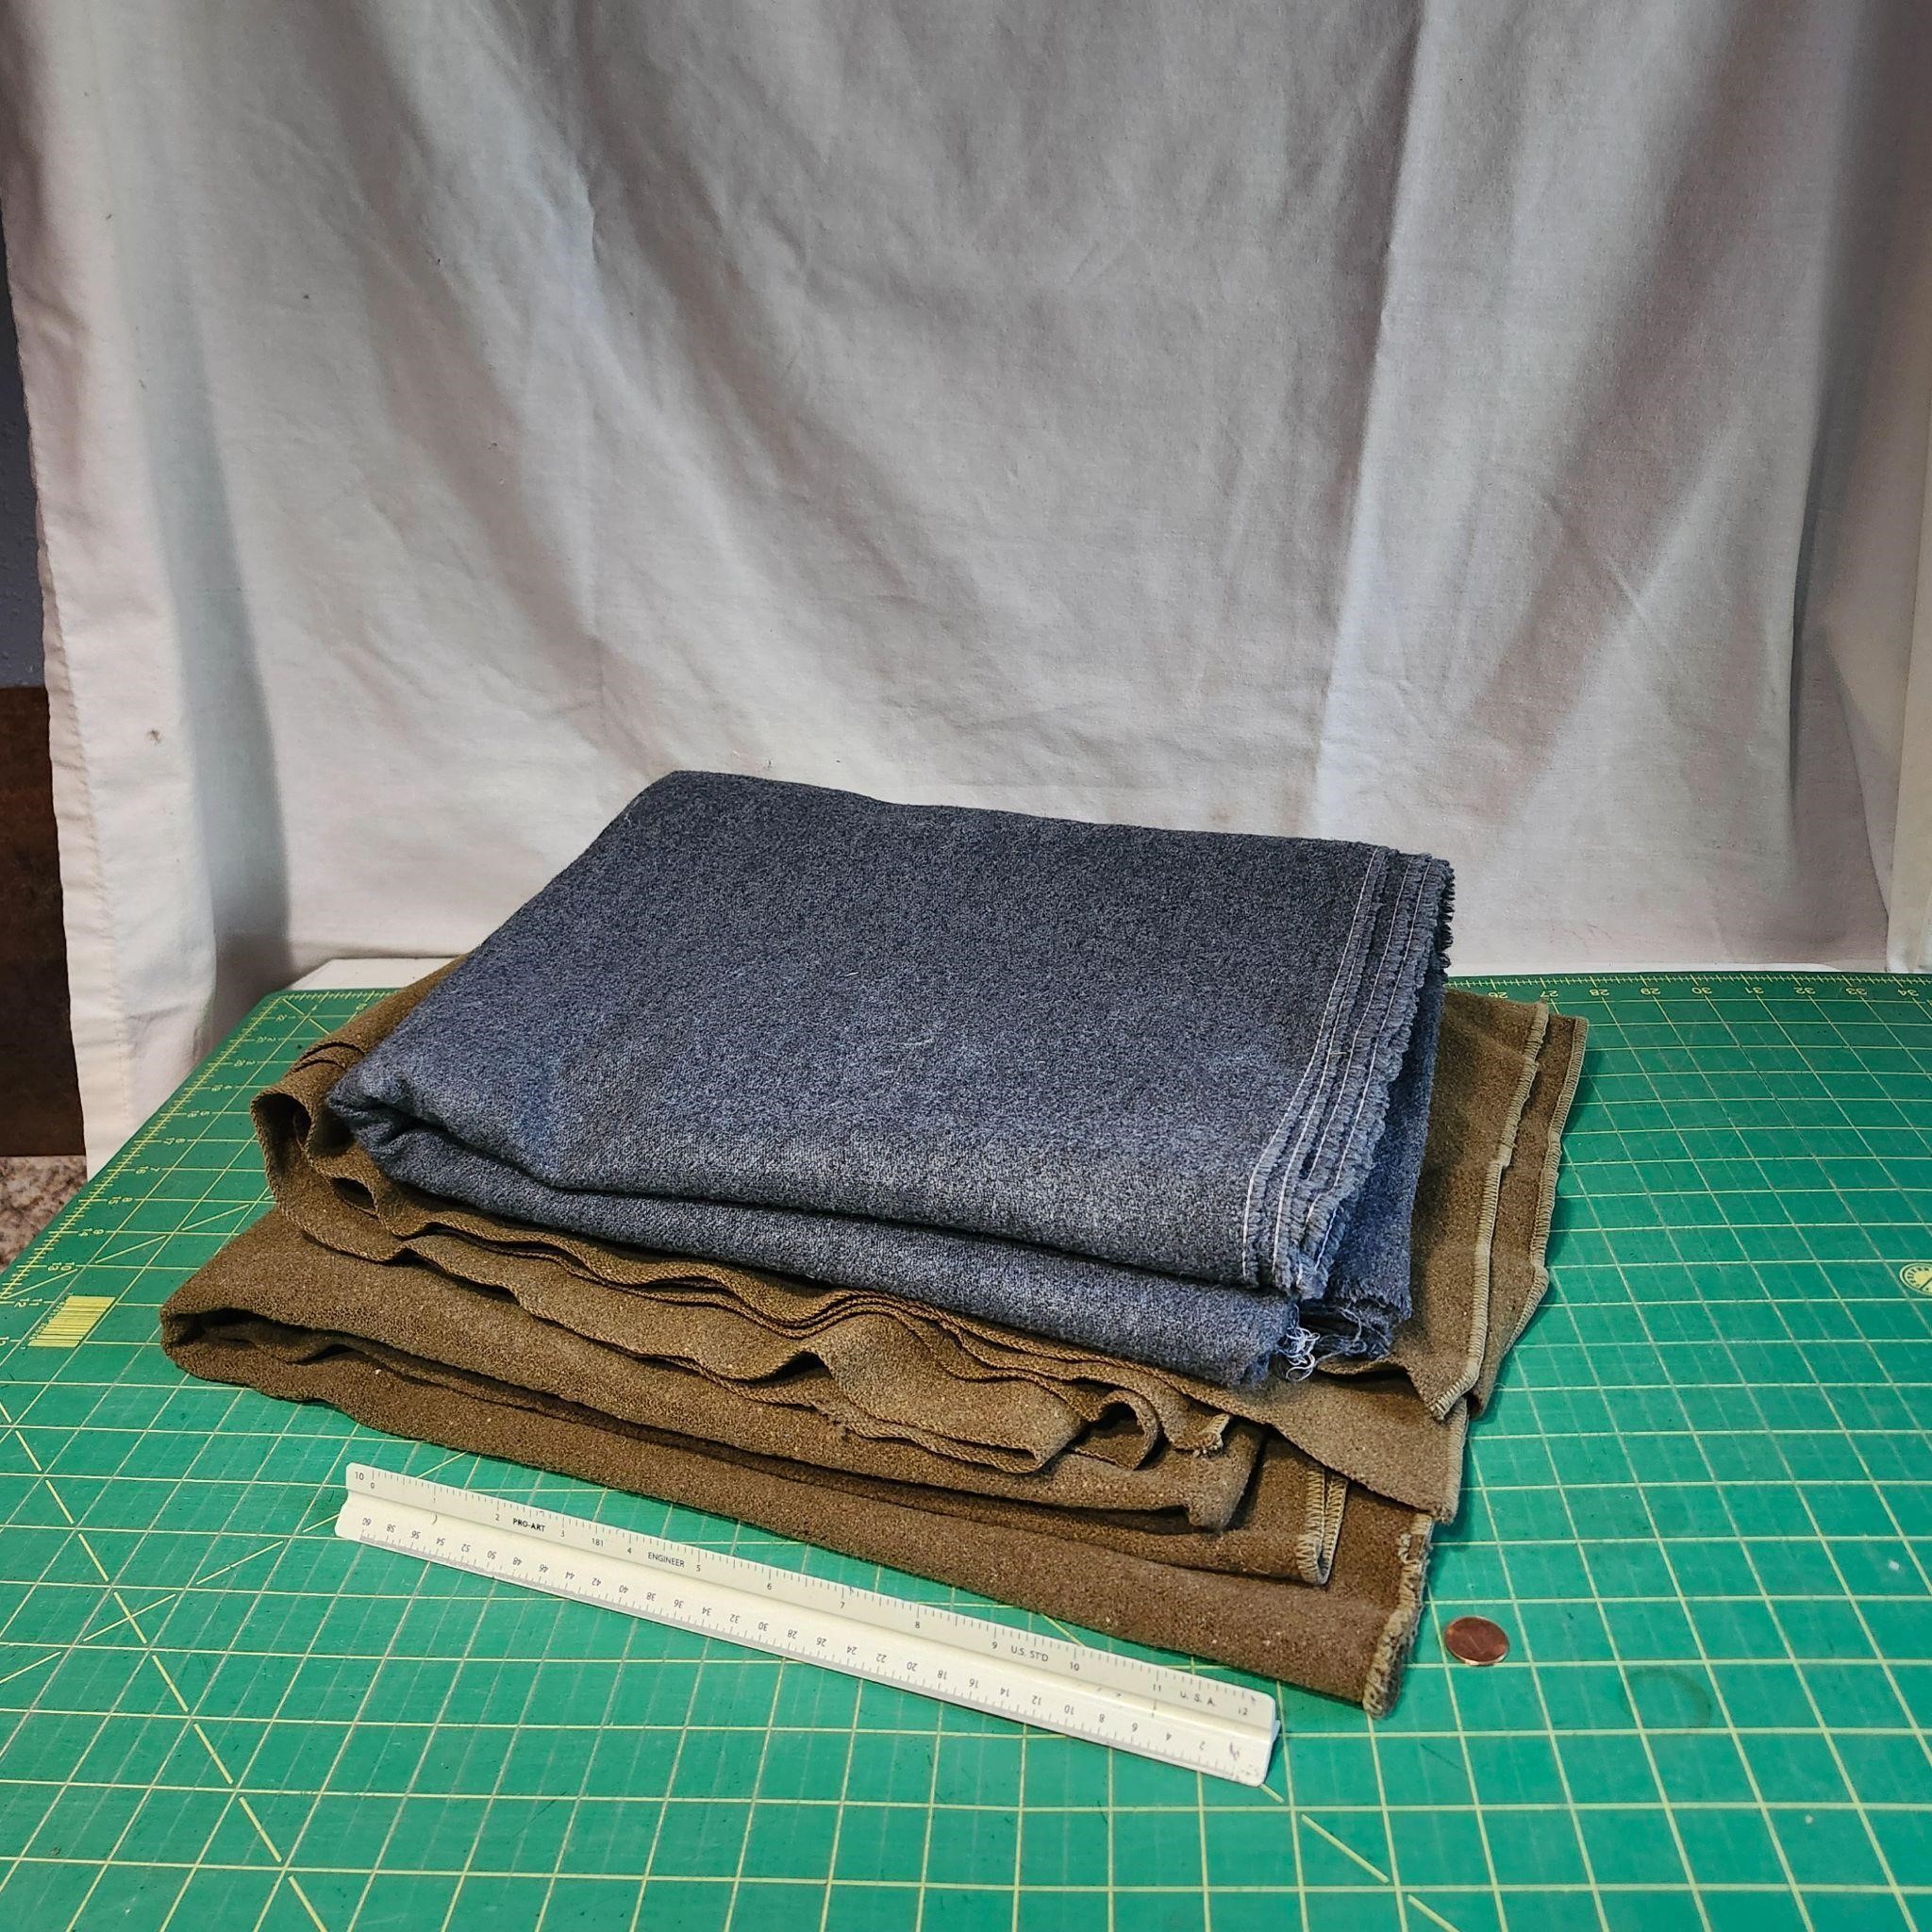 91"×60" & 72"×56" wool blankets/material